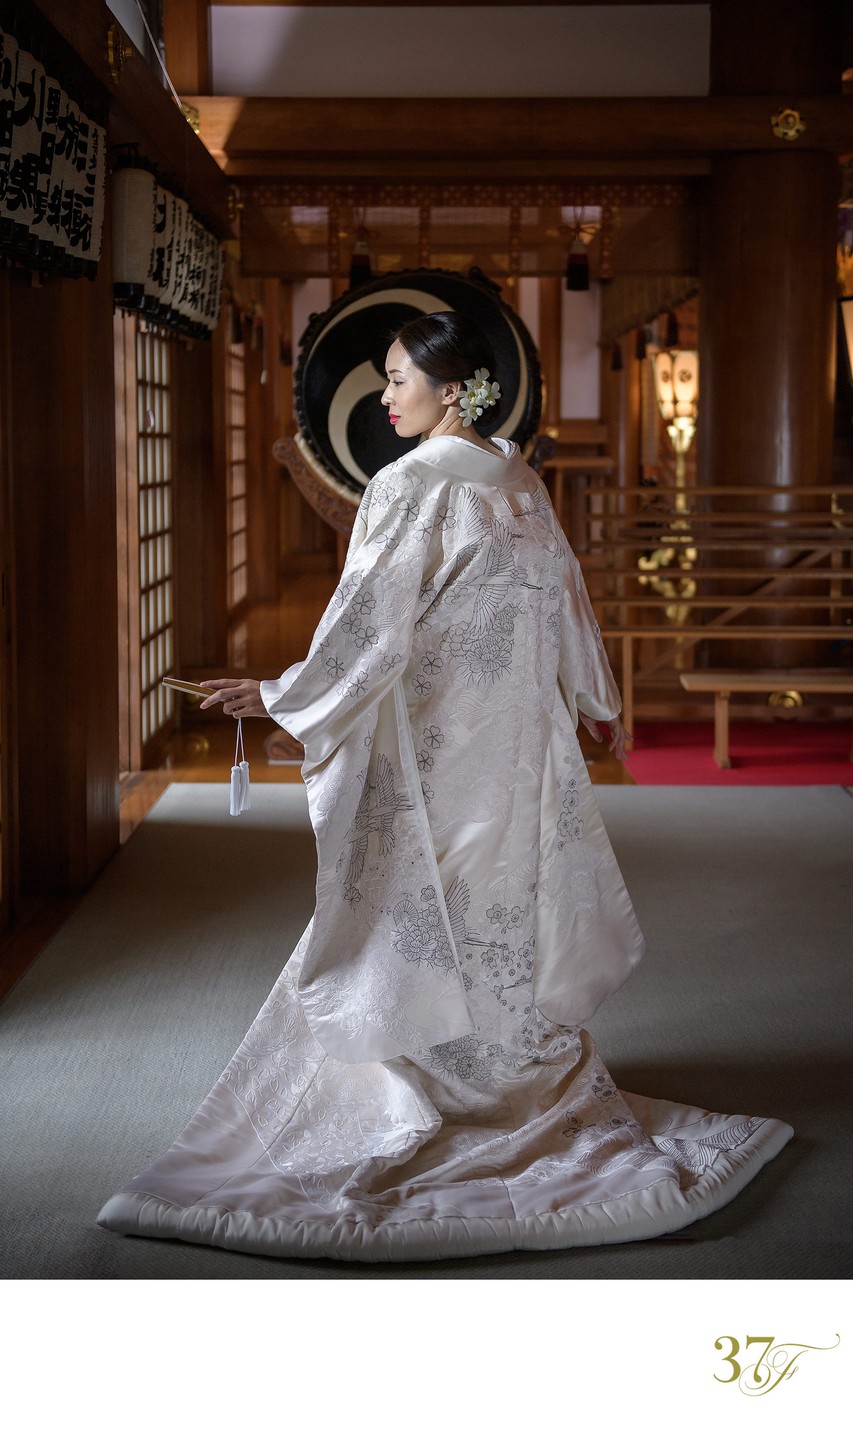 Best wedding photos from Japan